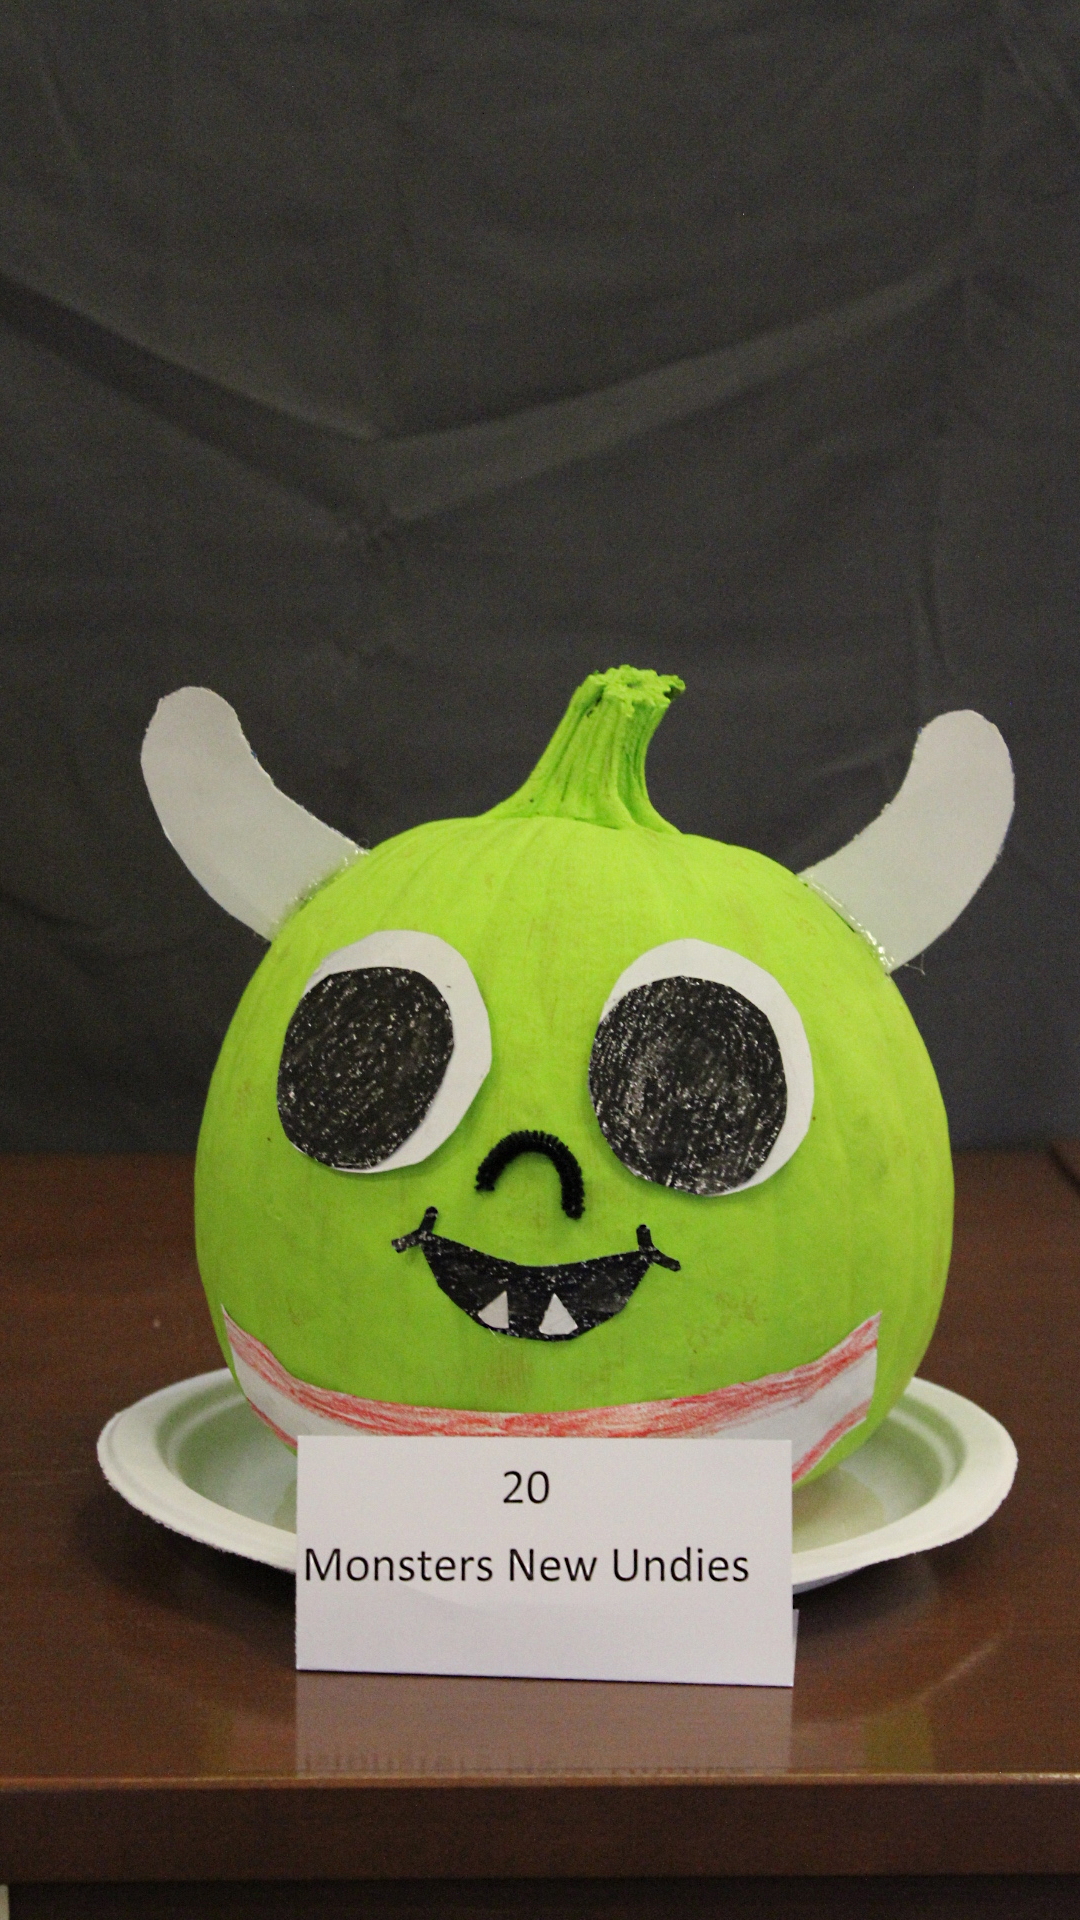 Pumpkin decorated as "Monster's New Undies"